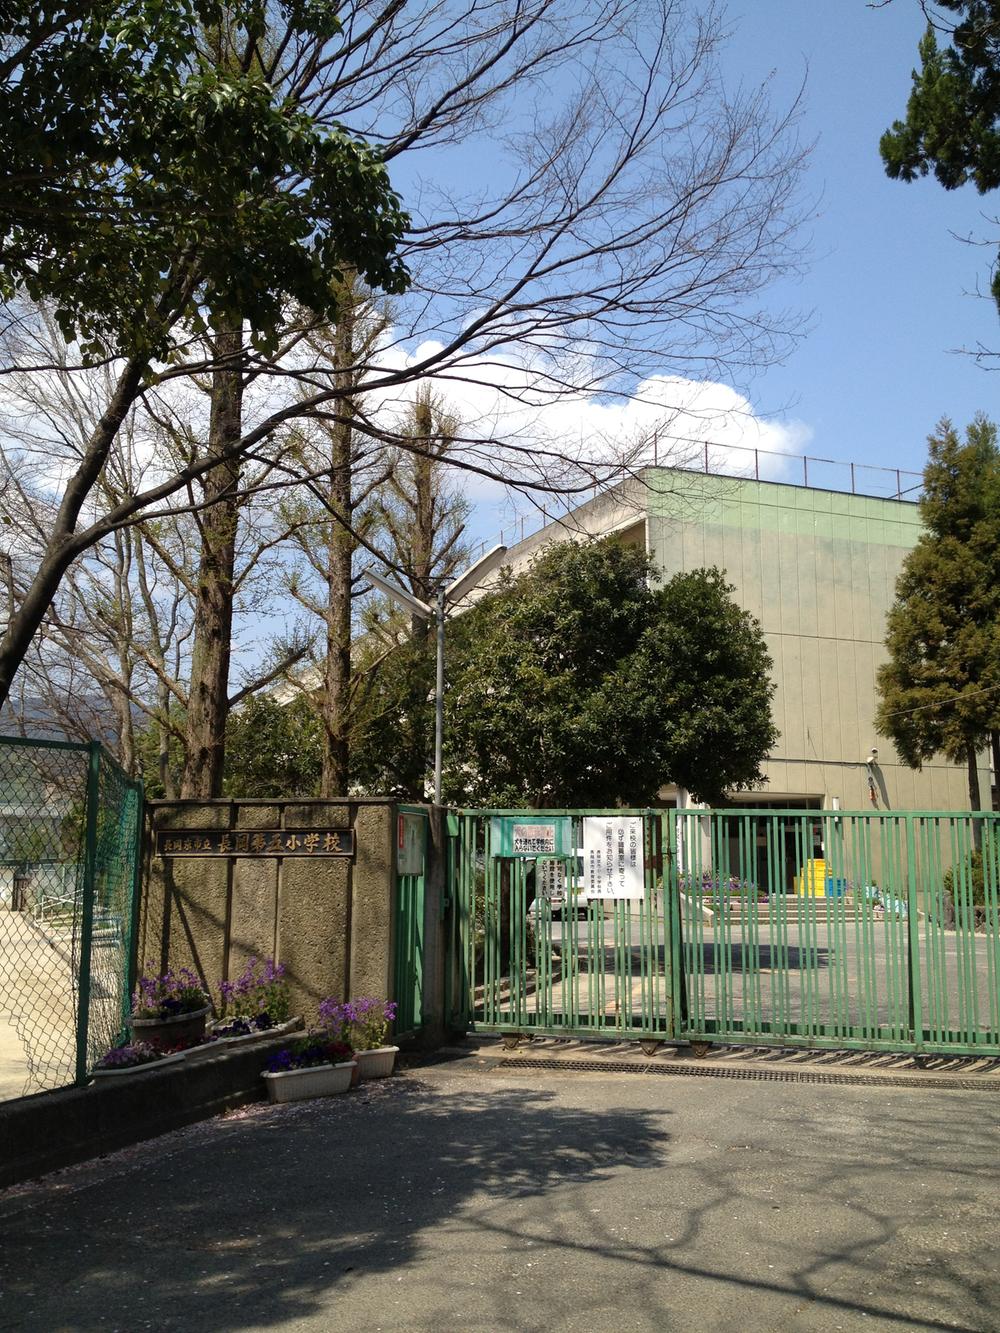 Primary school. Nagaokakyo 778m to stand Nagaoka fifth elementary school